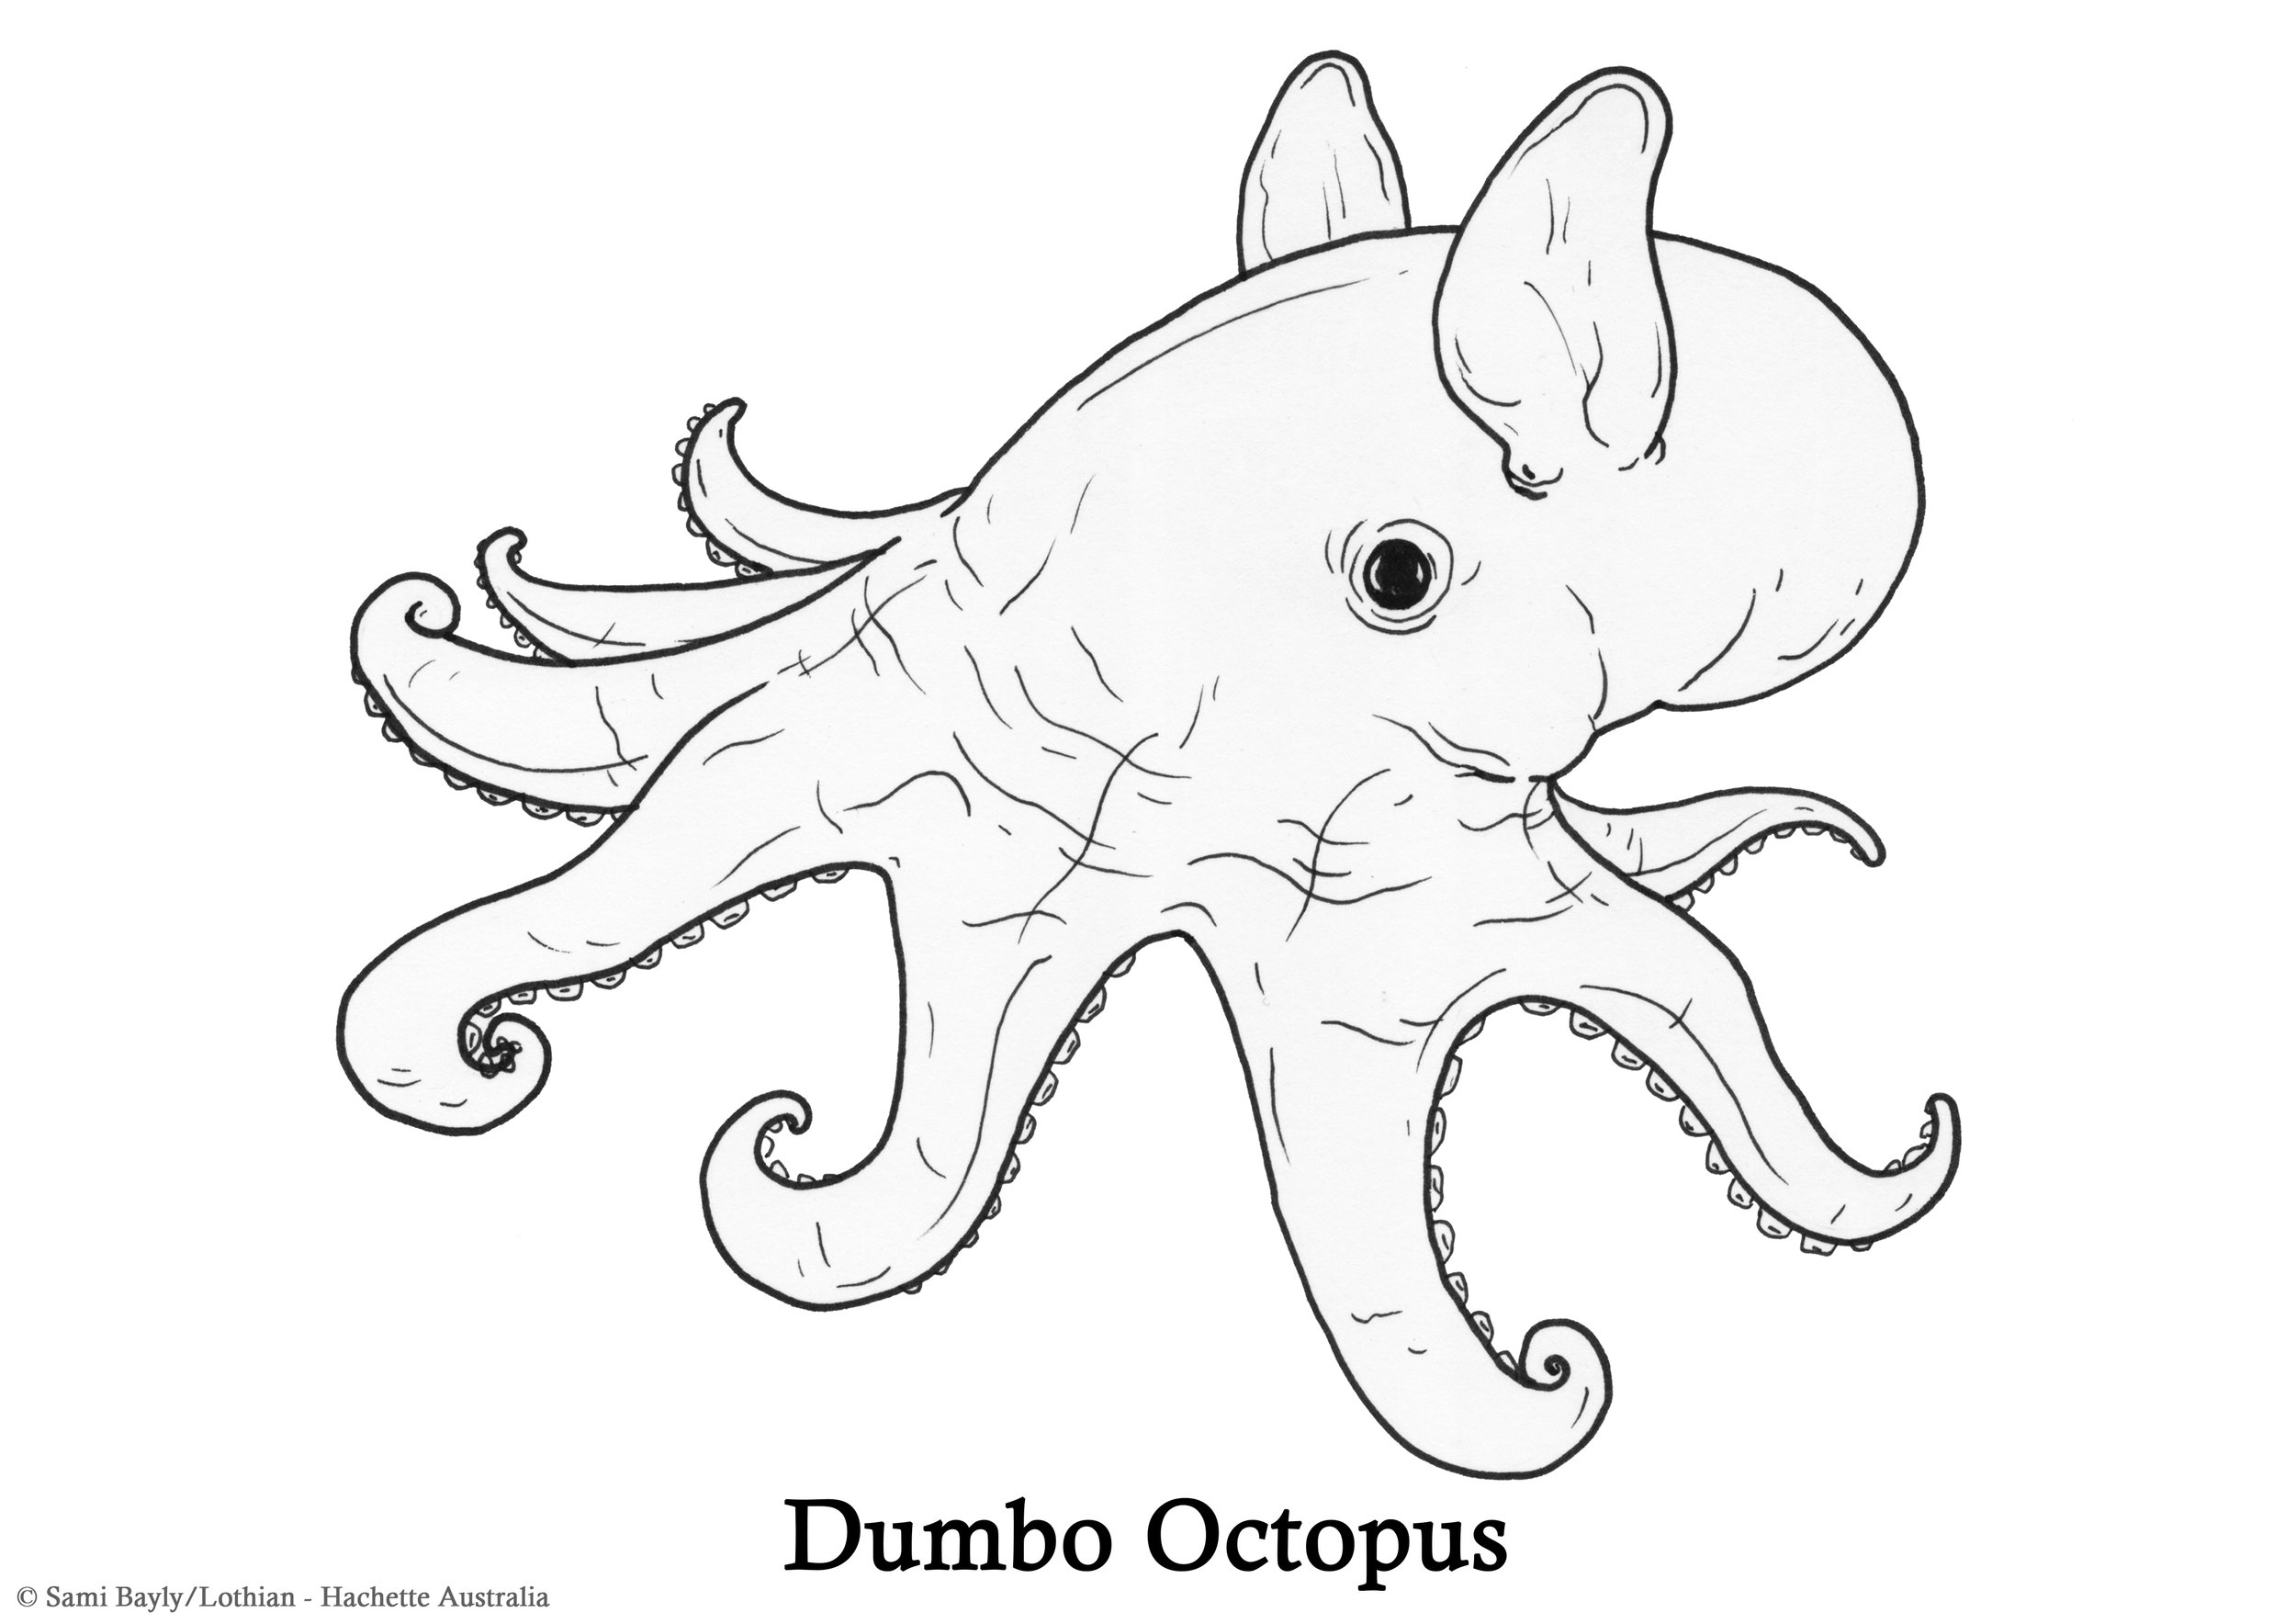 Dumbo Octopus Line Drawing.jpg